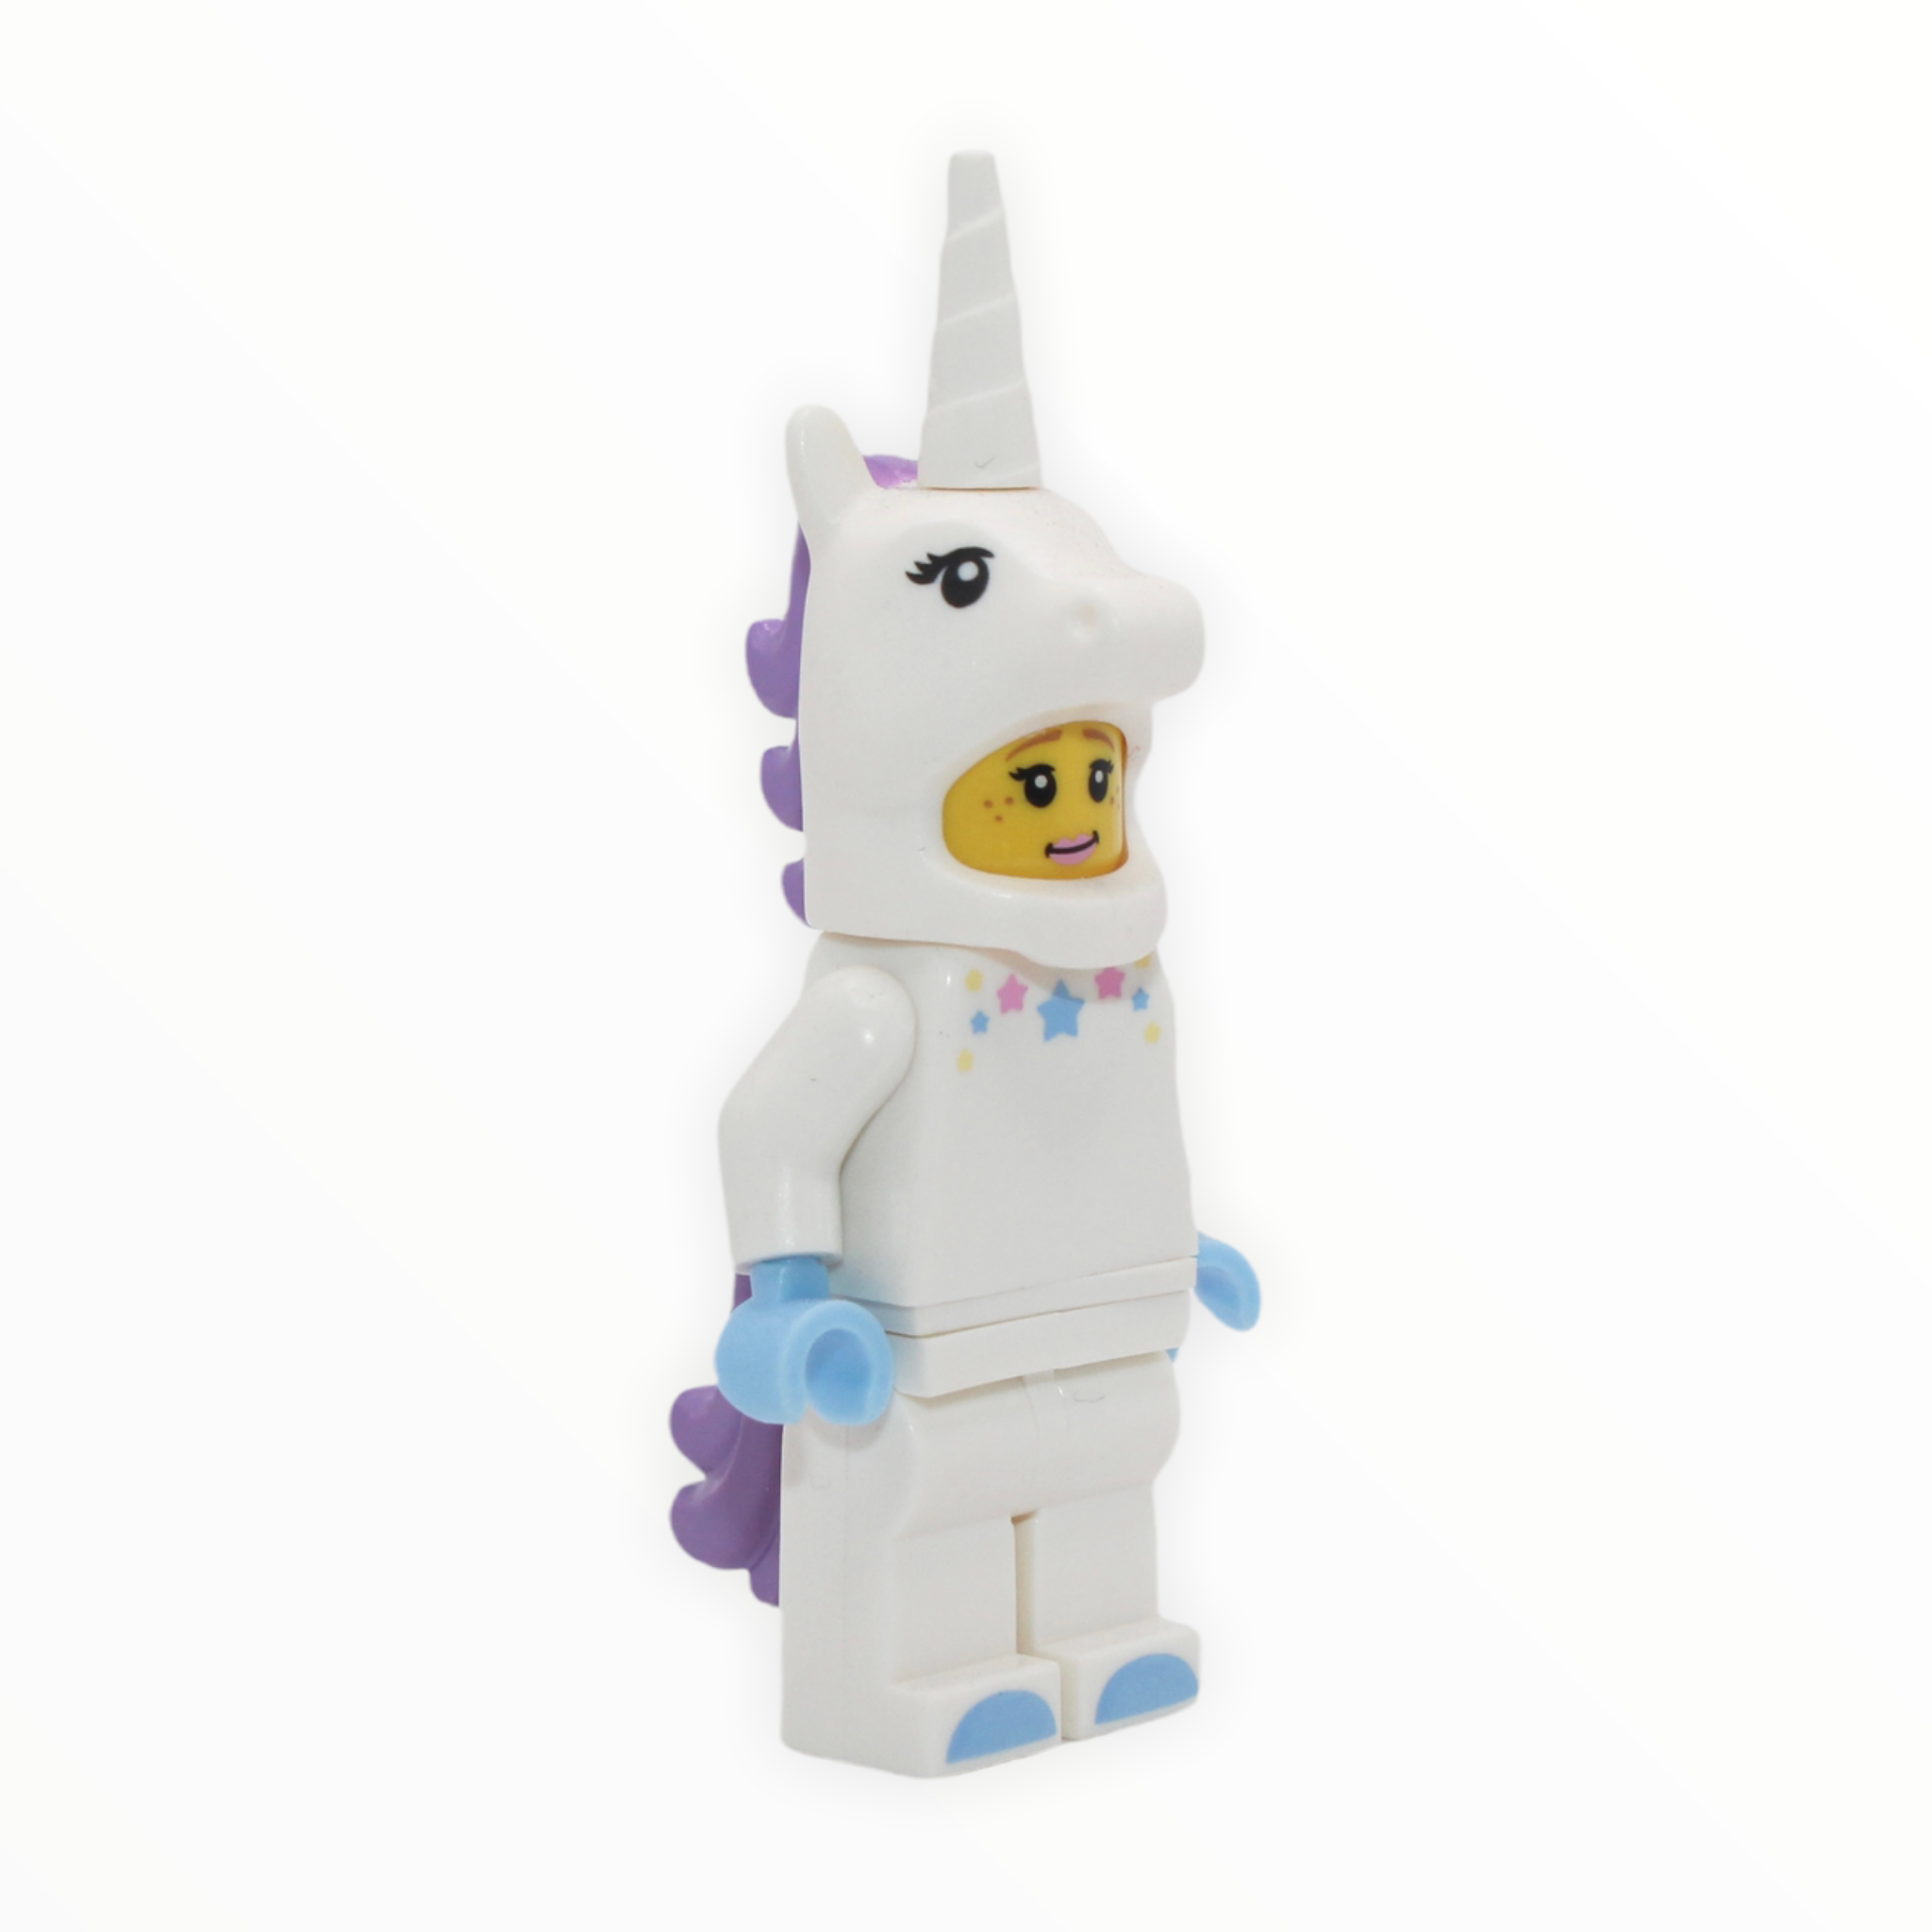 LEGO SERIES 13 UNICORN GIRL MINIFIG SET 71008 minifigure